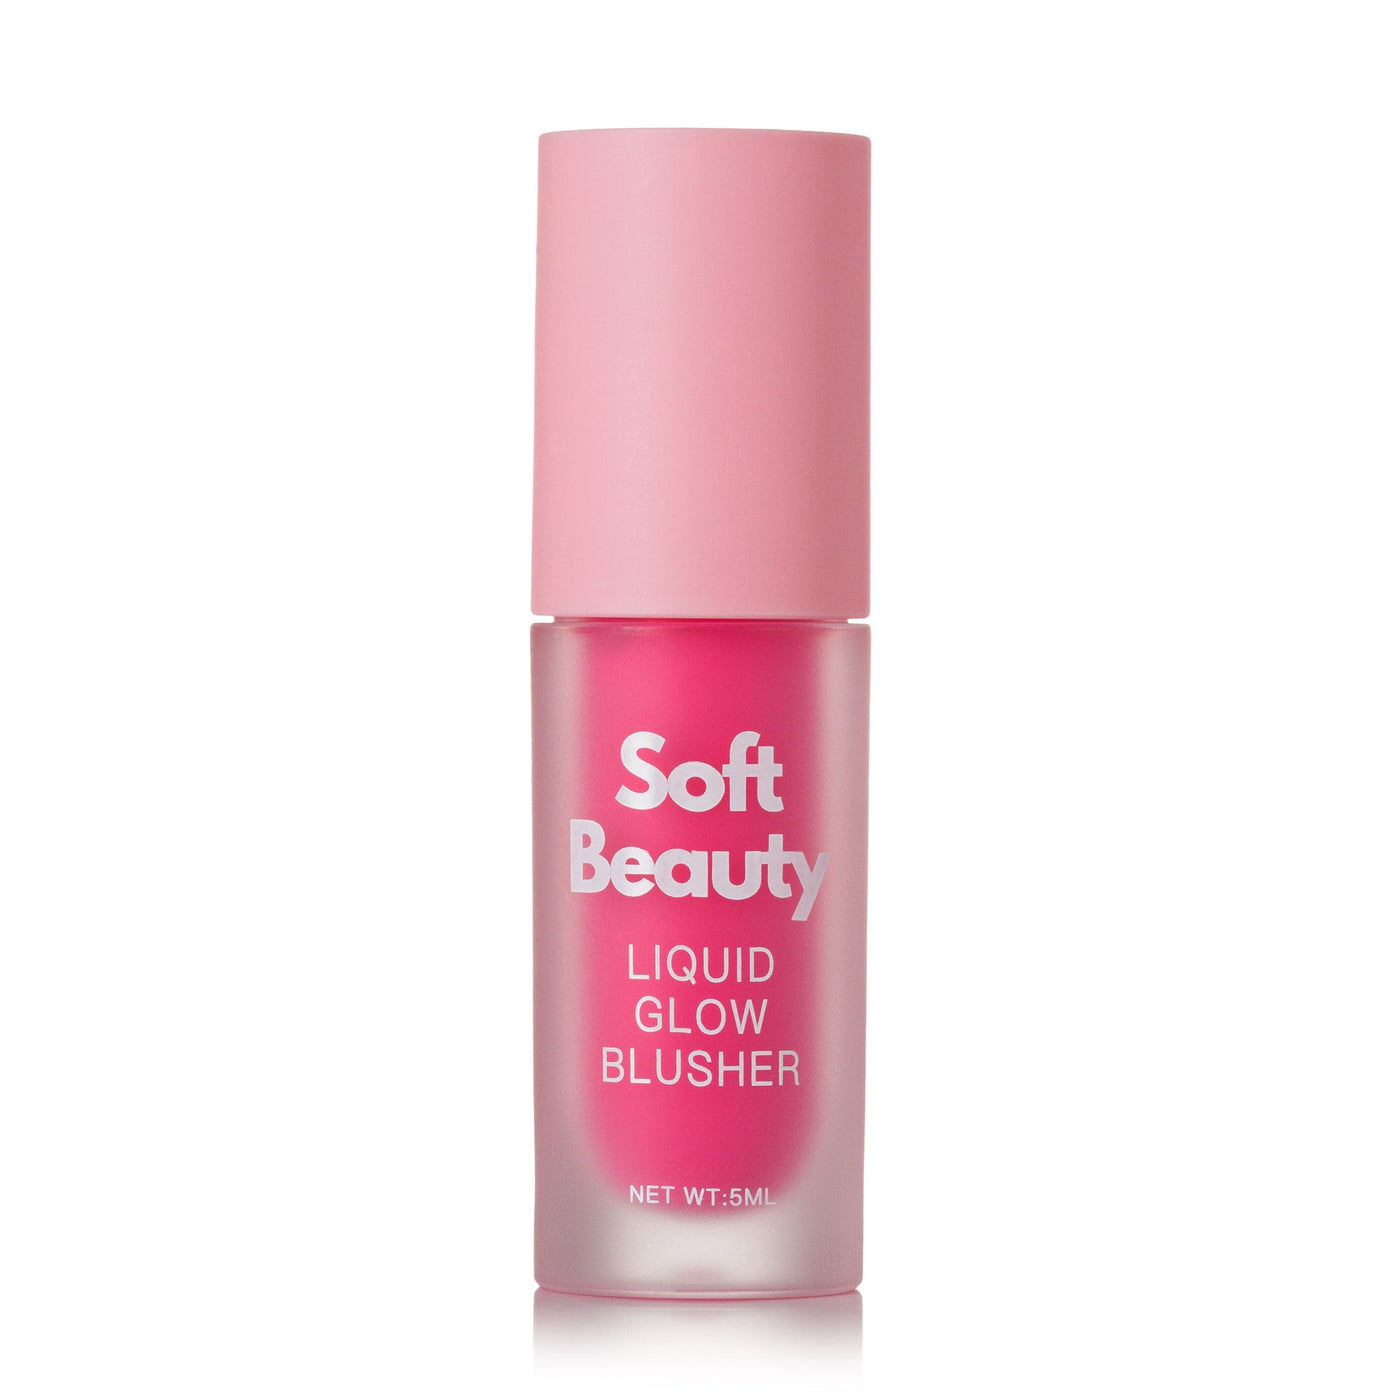 Soft Beauty Blushes & Bronzers - Main Character Liquid Blush